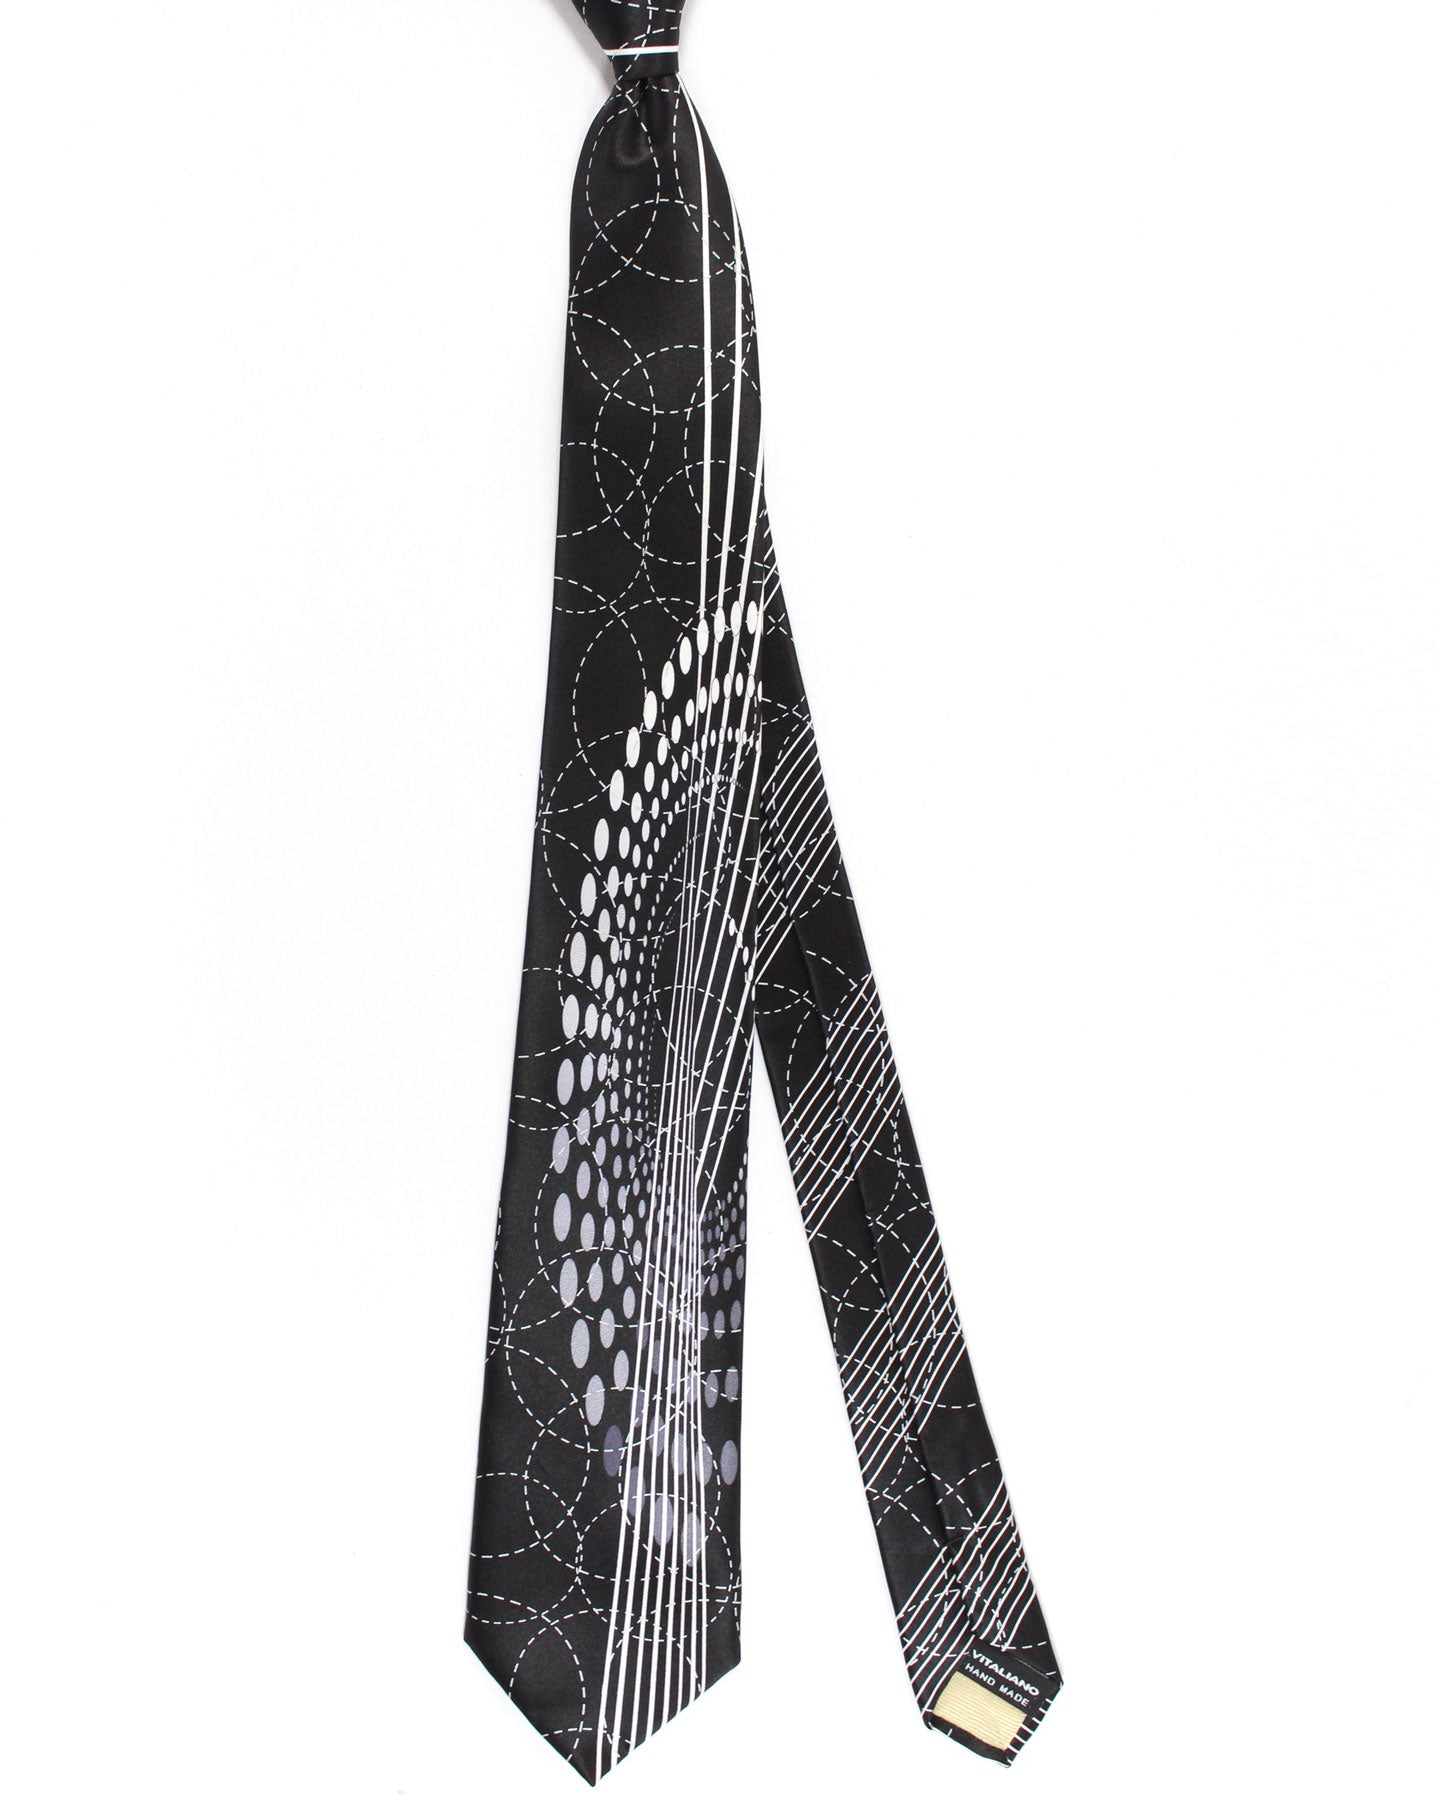 Vitaliano Pancaldi Silk Tie Black Gray Geometric Design